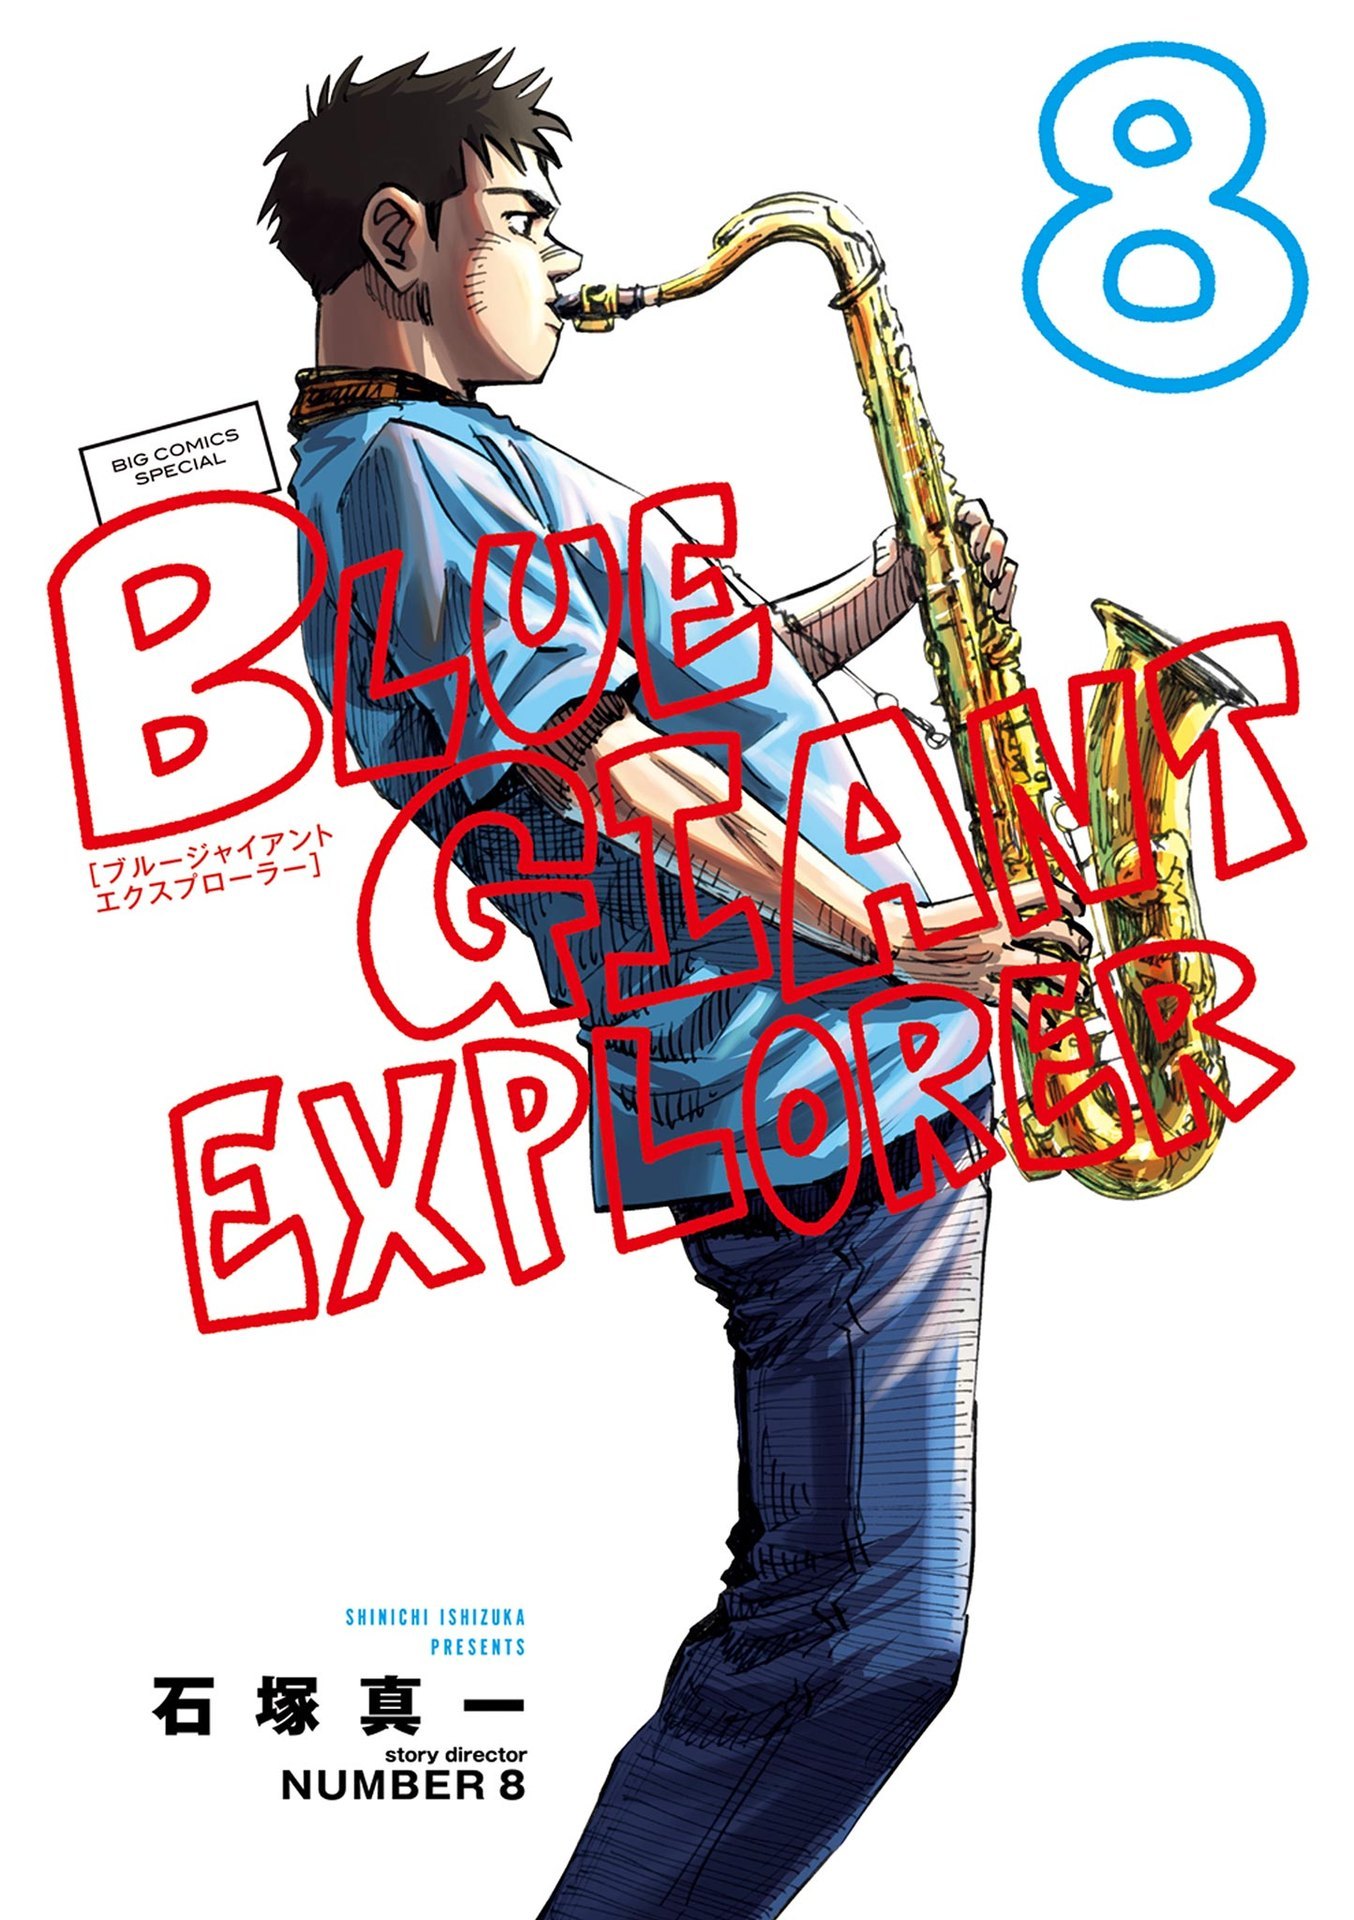 Blue Giant Explorer - MangaDex